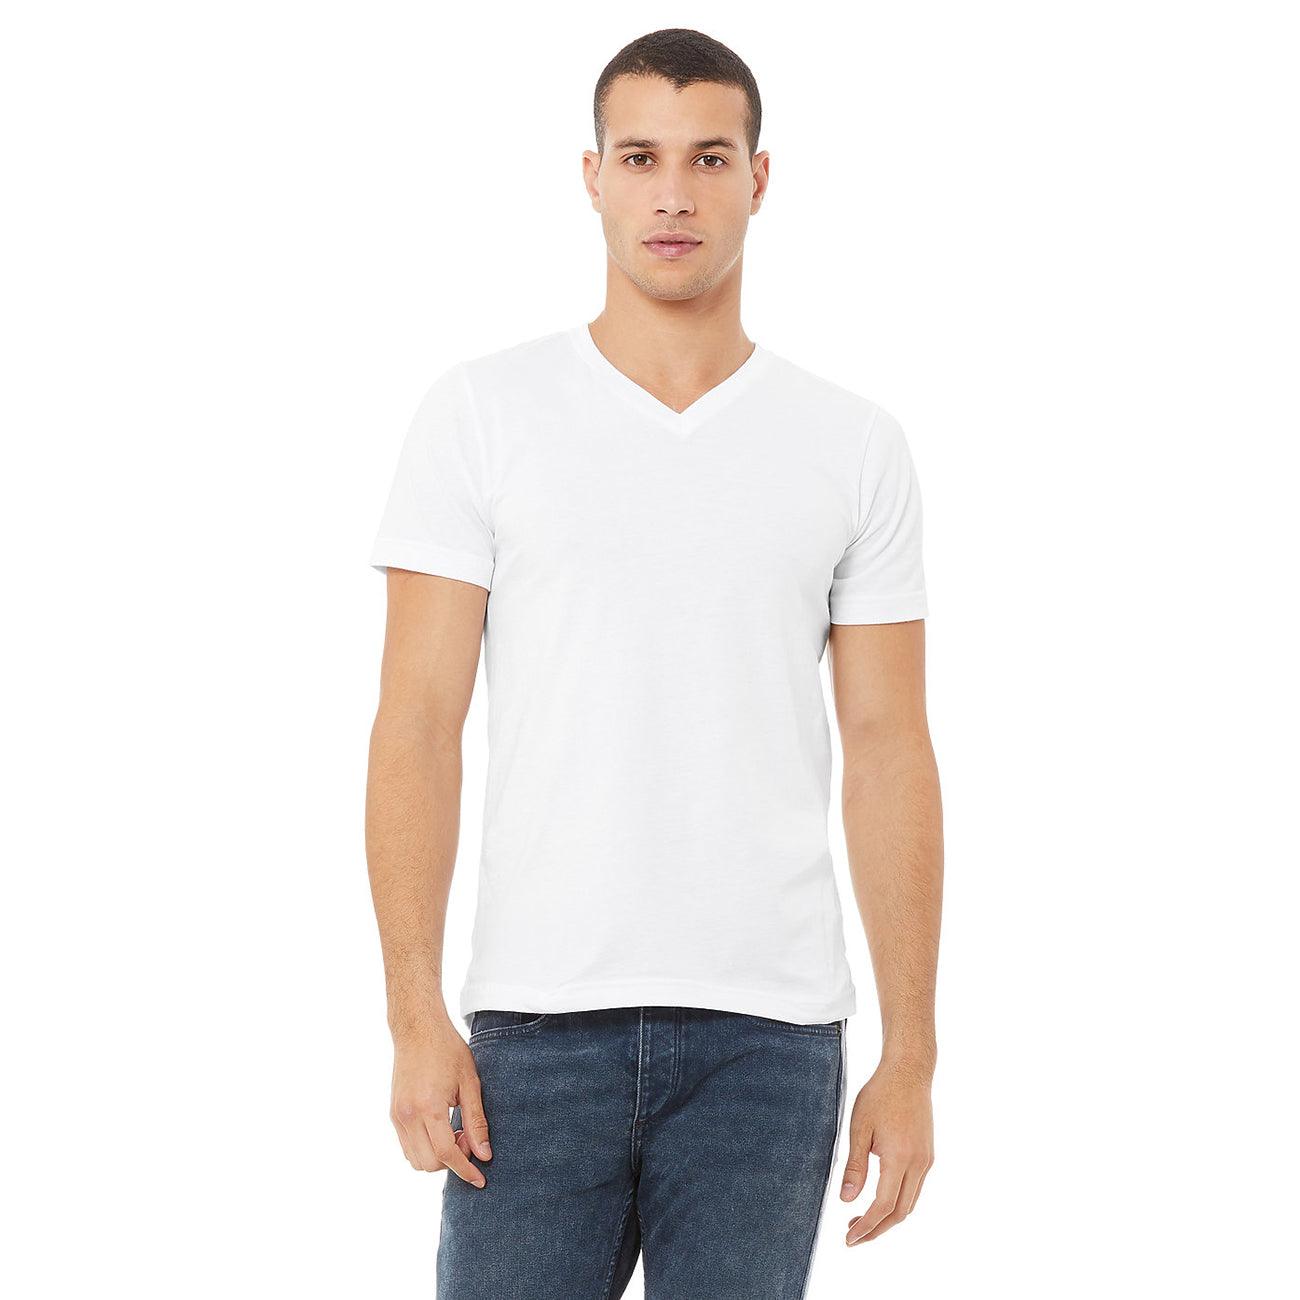 Men's V-Neck Soft Cotton T-Shirt (10596) - Brands River